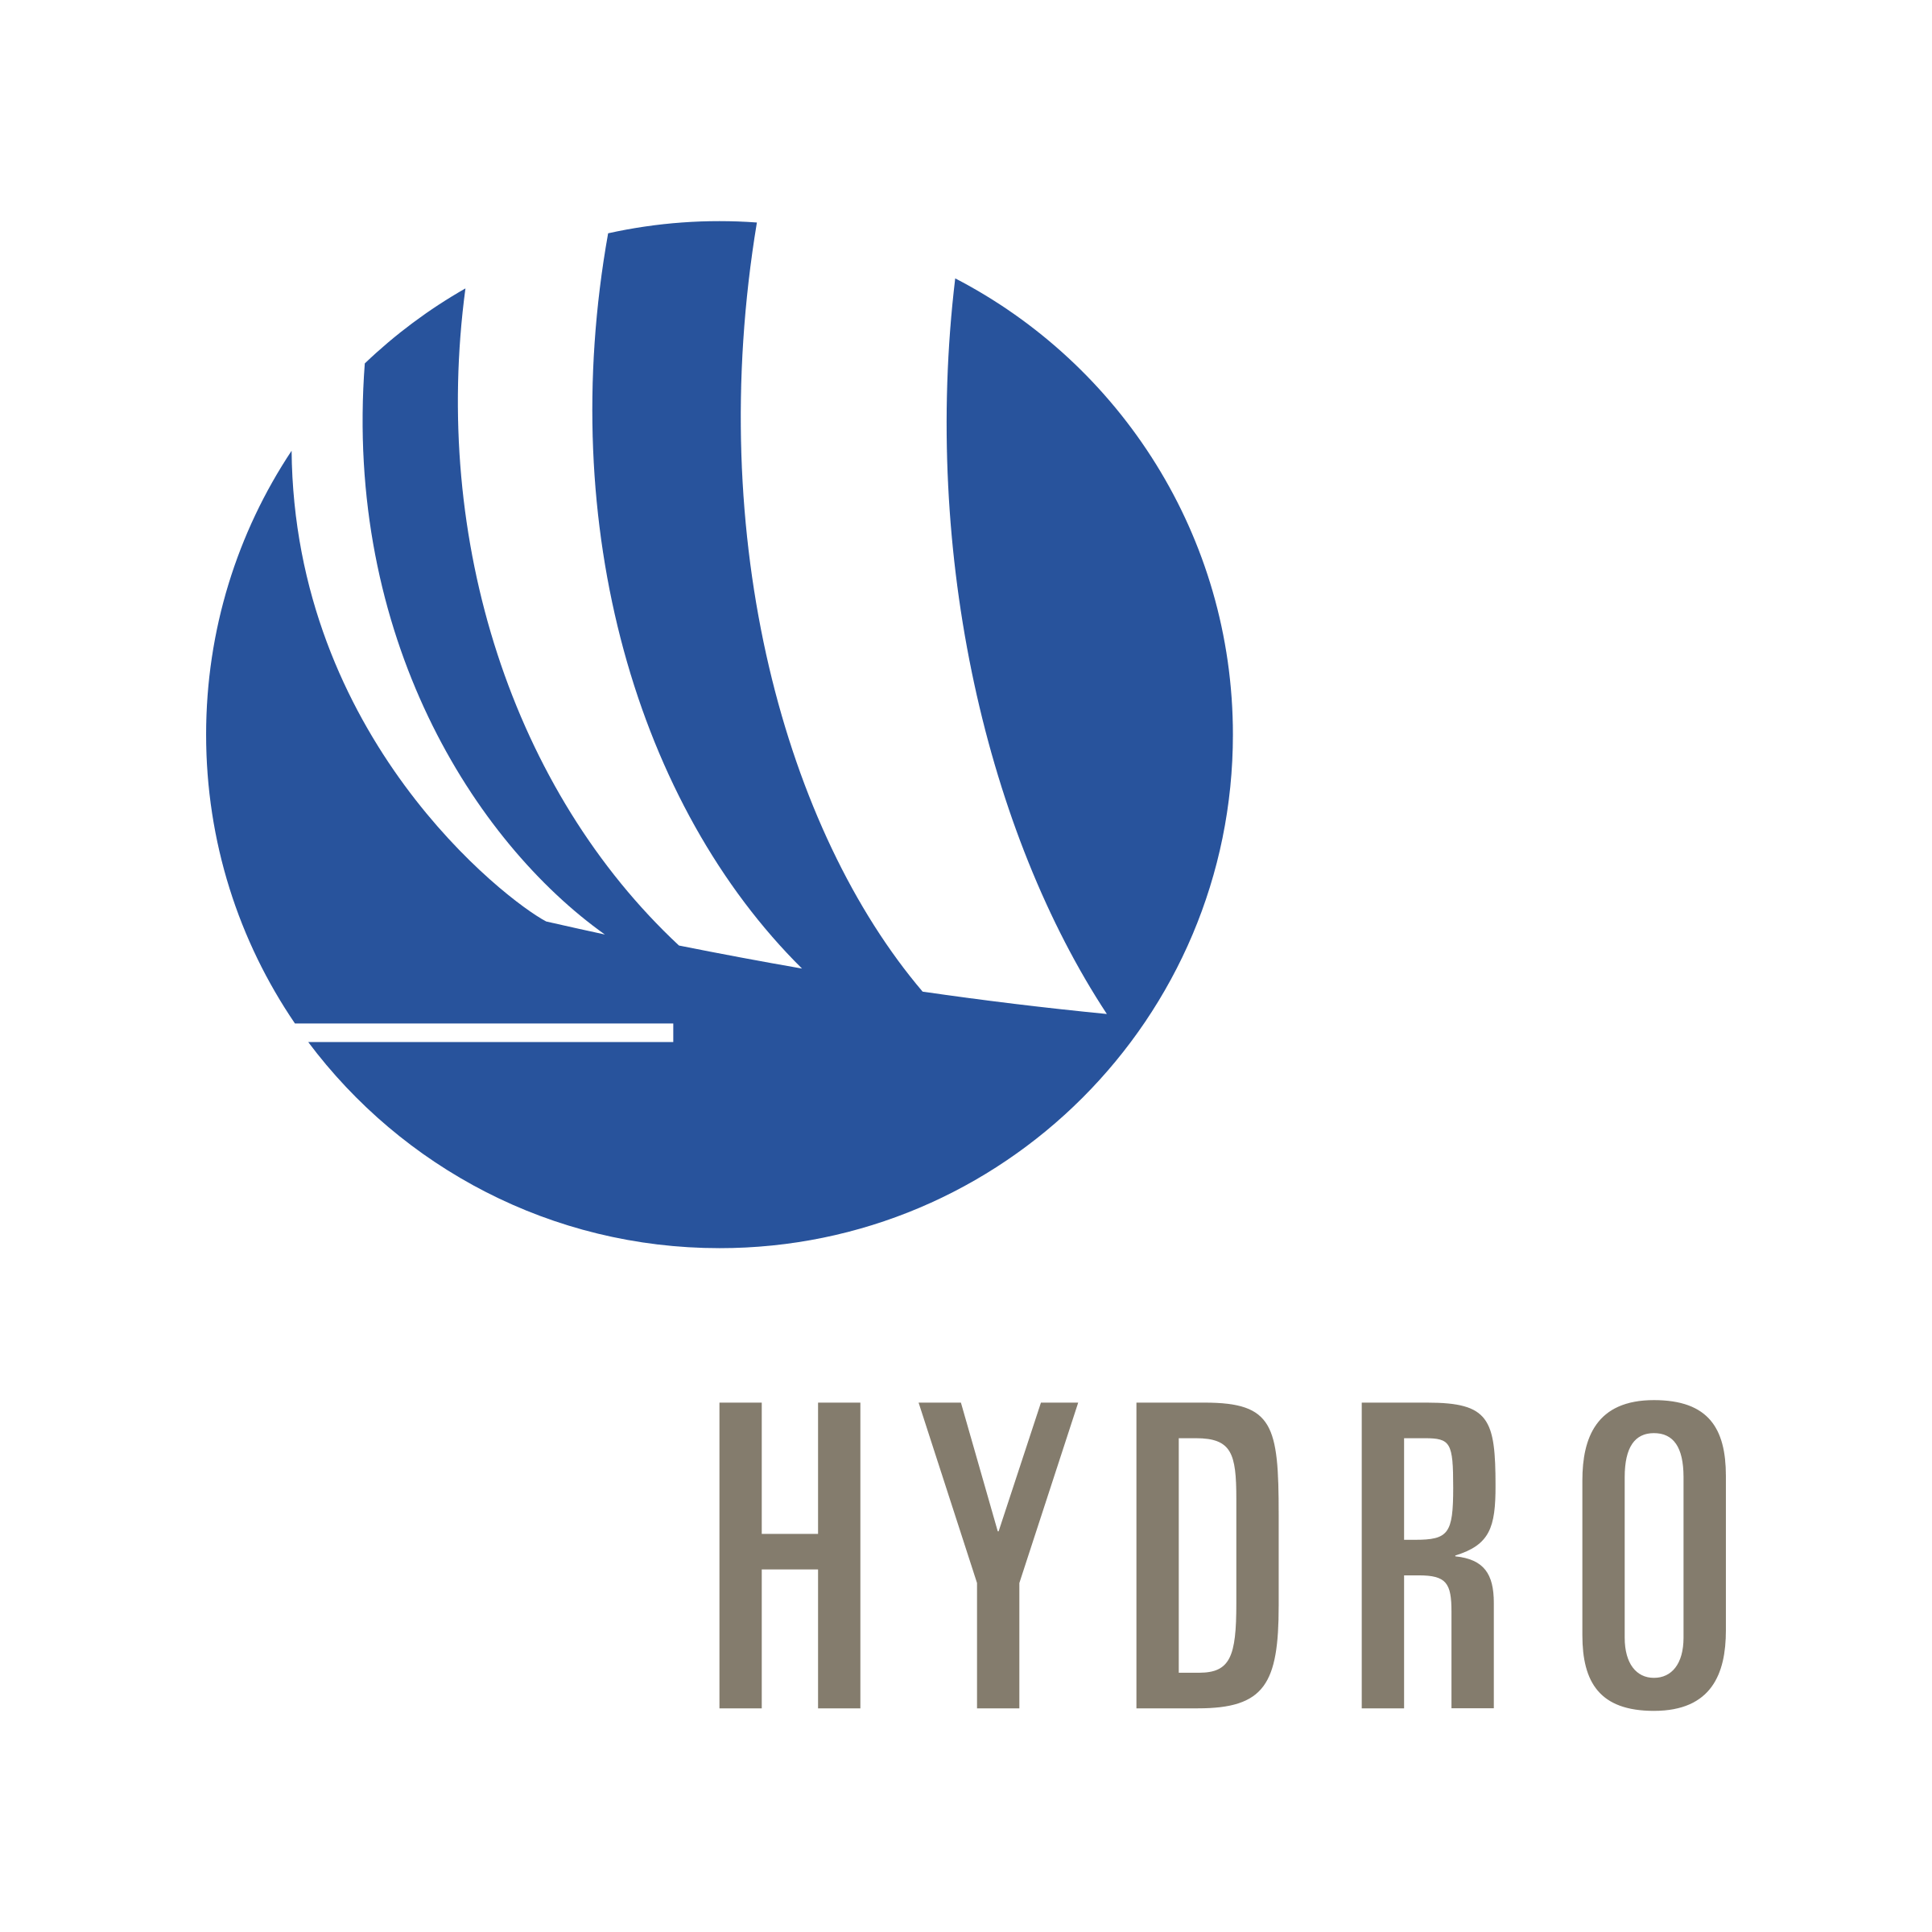 Hydro Logo - Hydro Logo PNG Transparent & SVG Vector - Freebie Supply